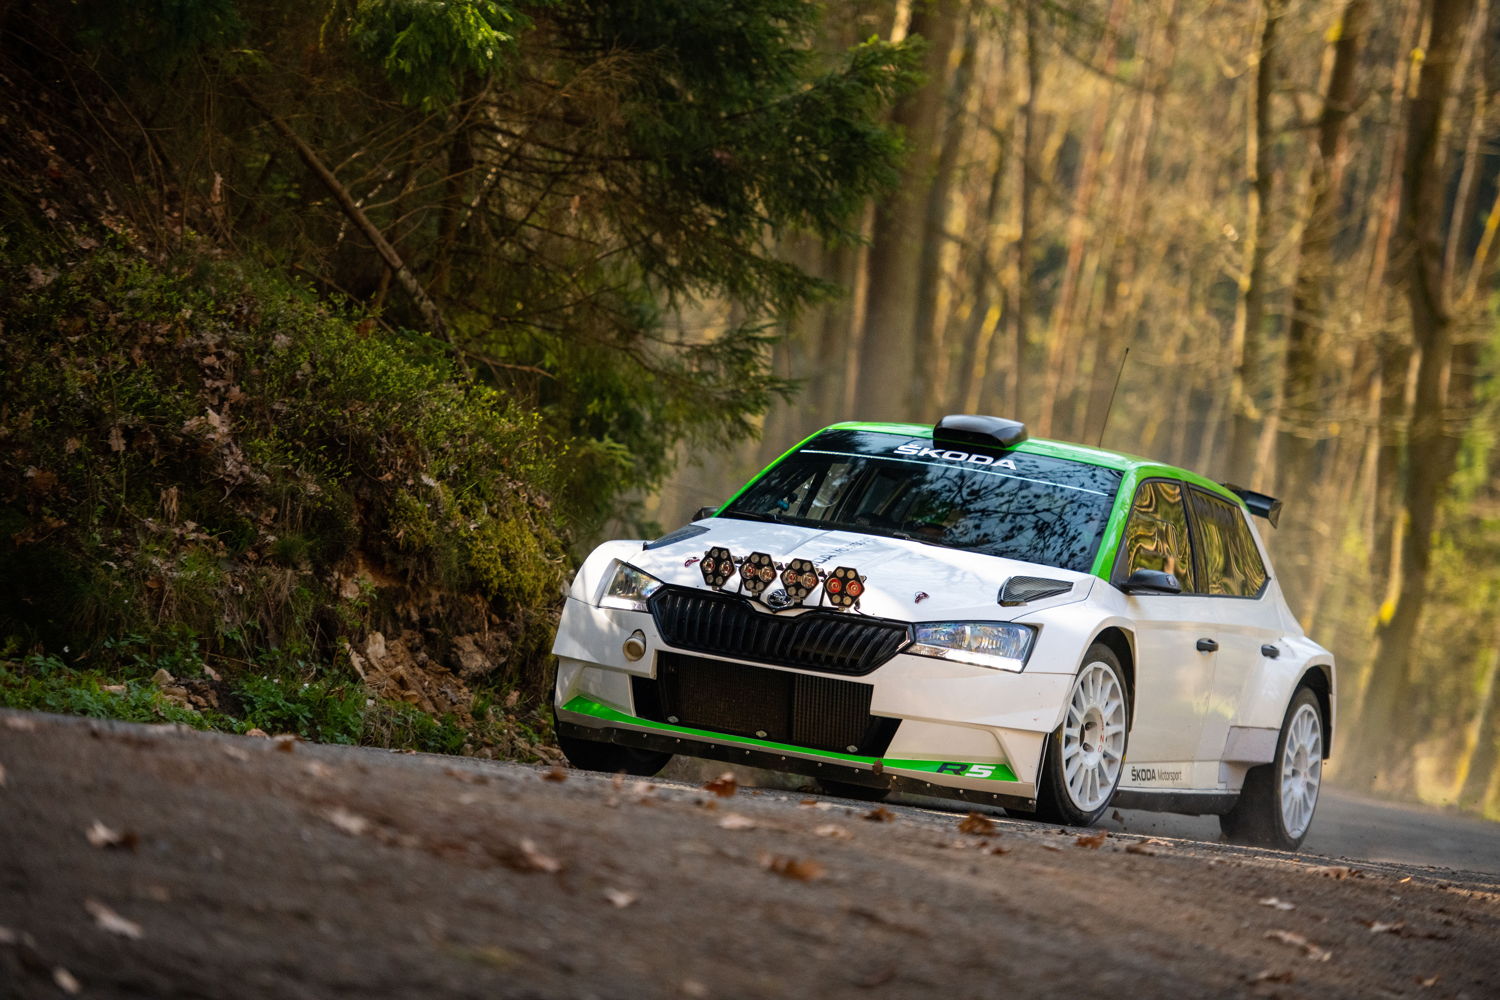 At Rally Český Krumlov, third round of the Czech Rally
Championship 2019, Jan Kopecký/Pavel Dresler will give
the updated ŠKODA FABIA R5 its world premiere